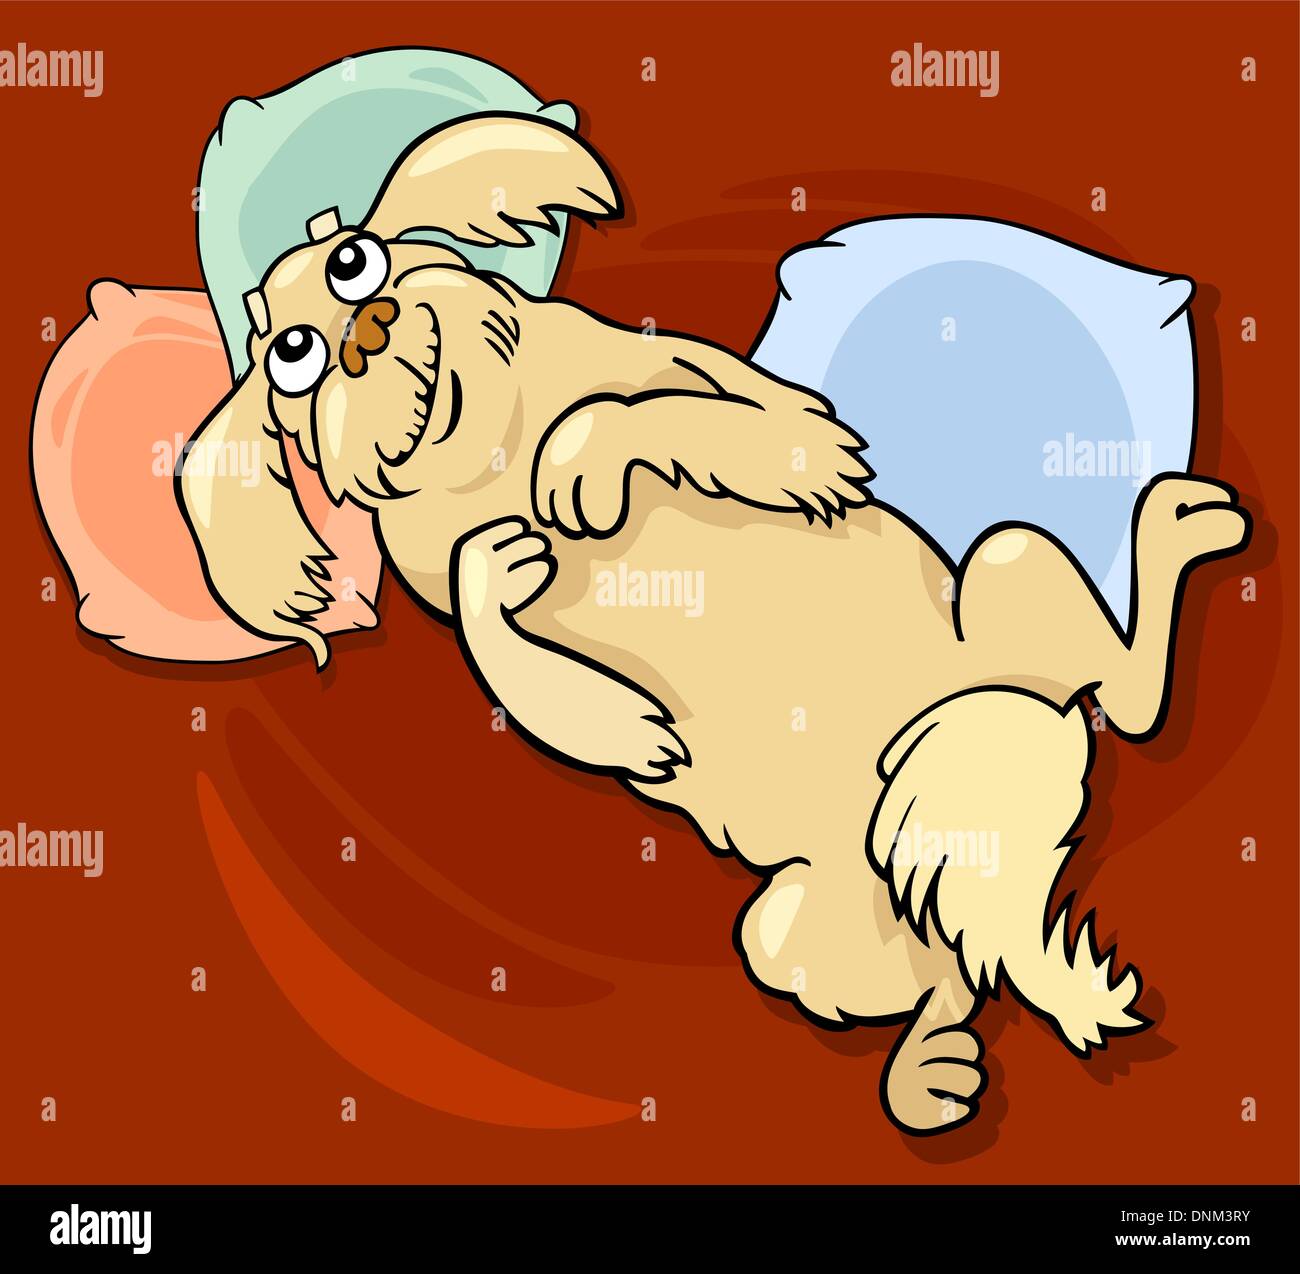 Cartoon Illustration of Happy Fluffy Dog or Pekingese on Bed Stock Vector